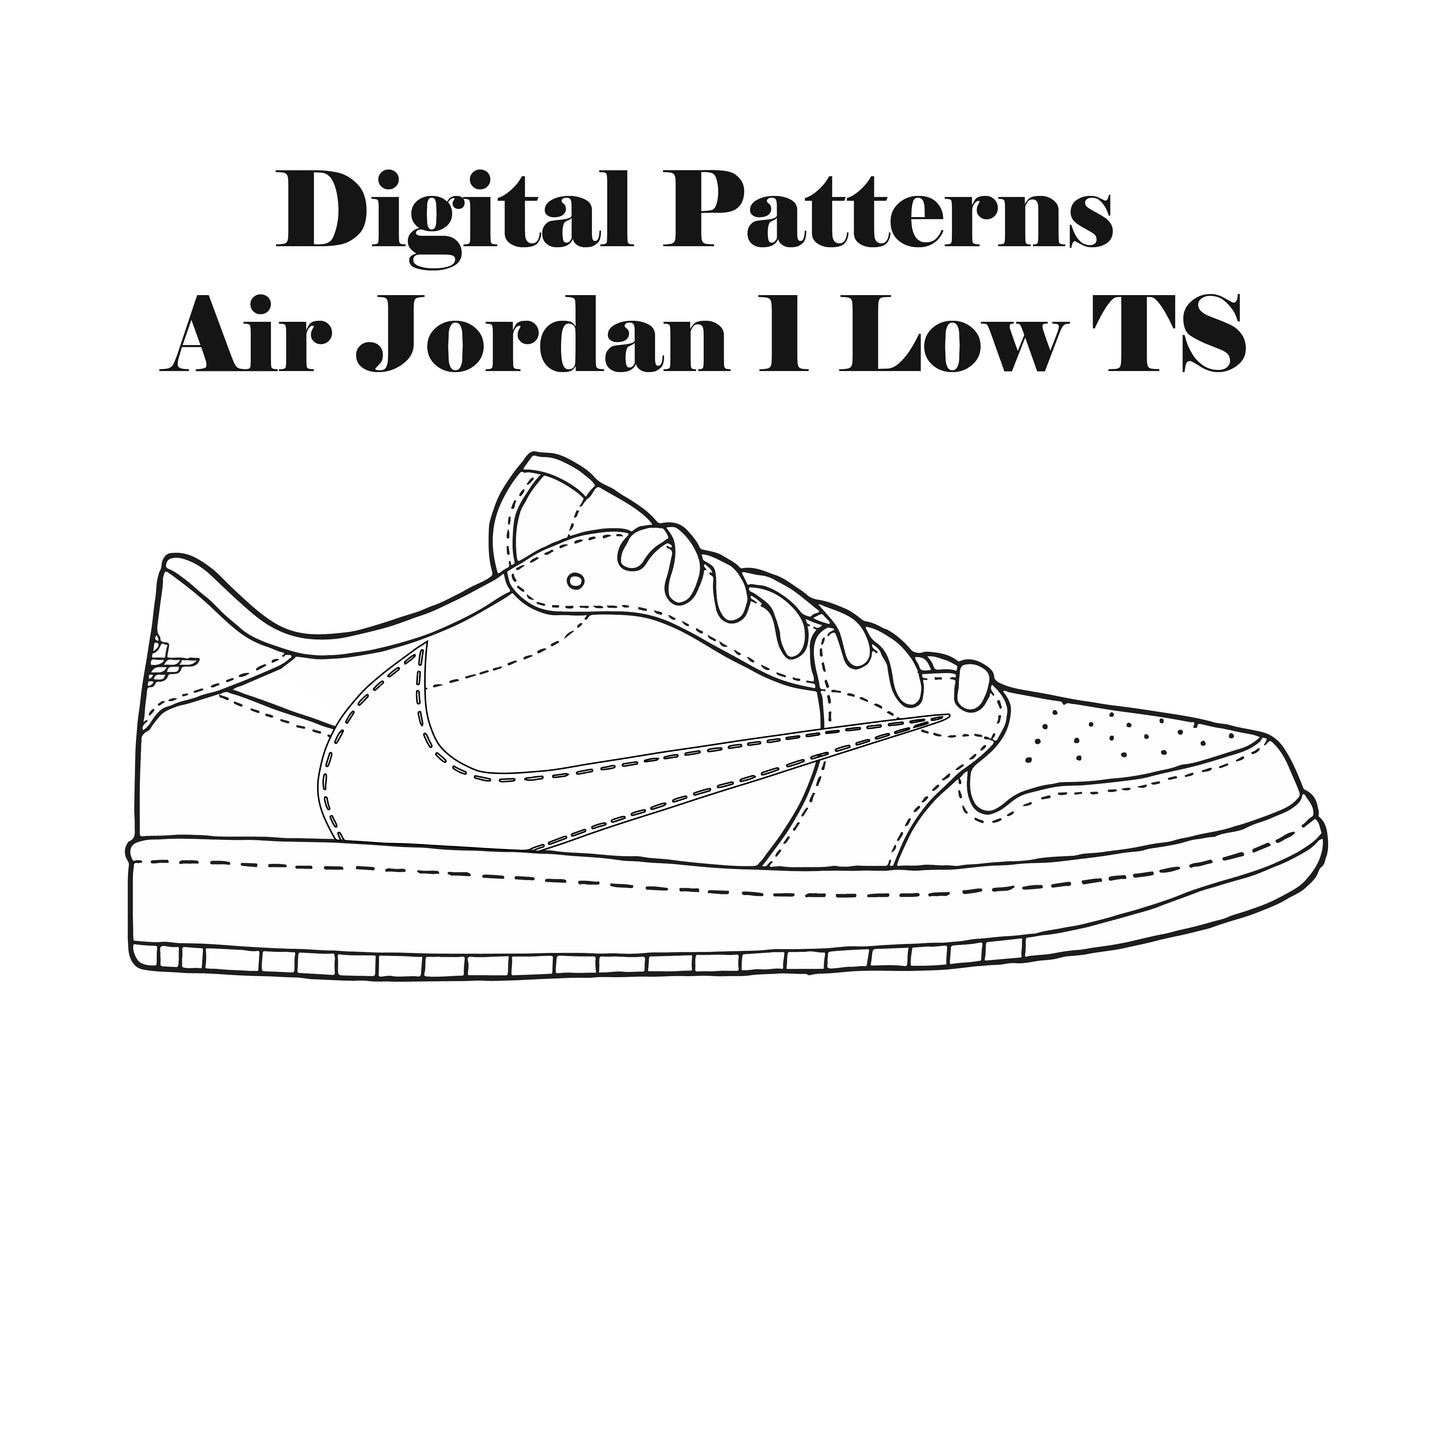 Air Jordan 1 Low Travis Scott Digital Patterns